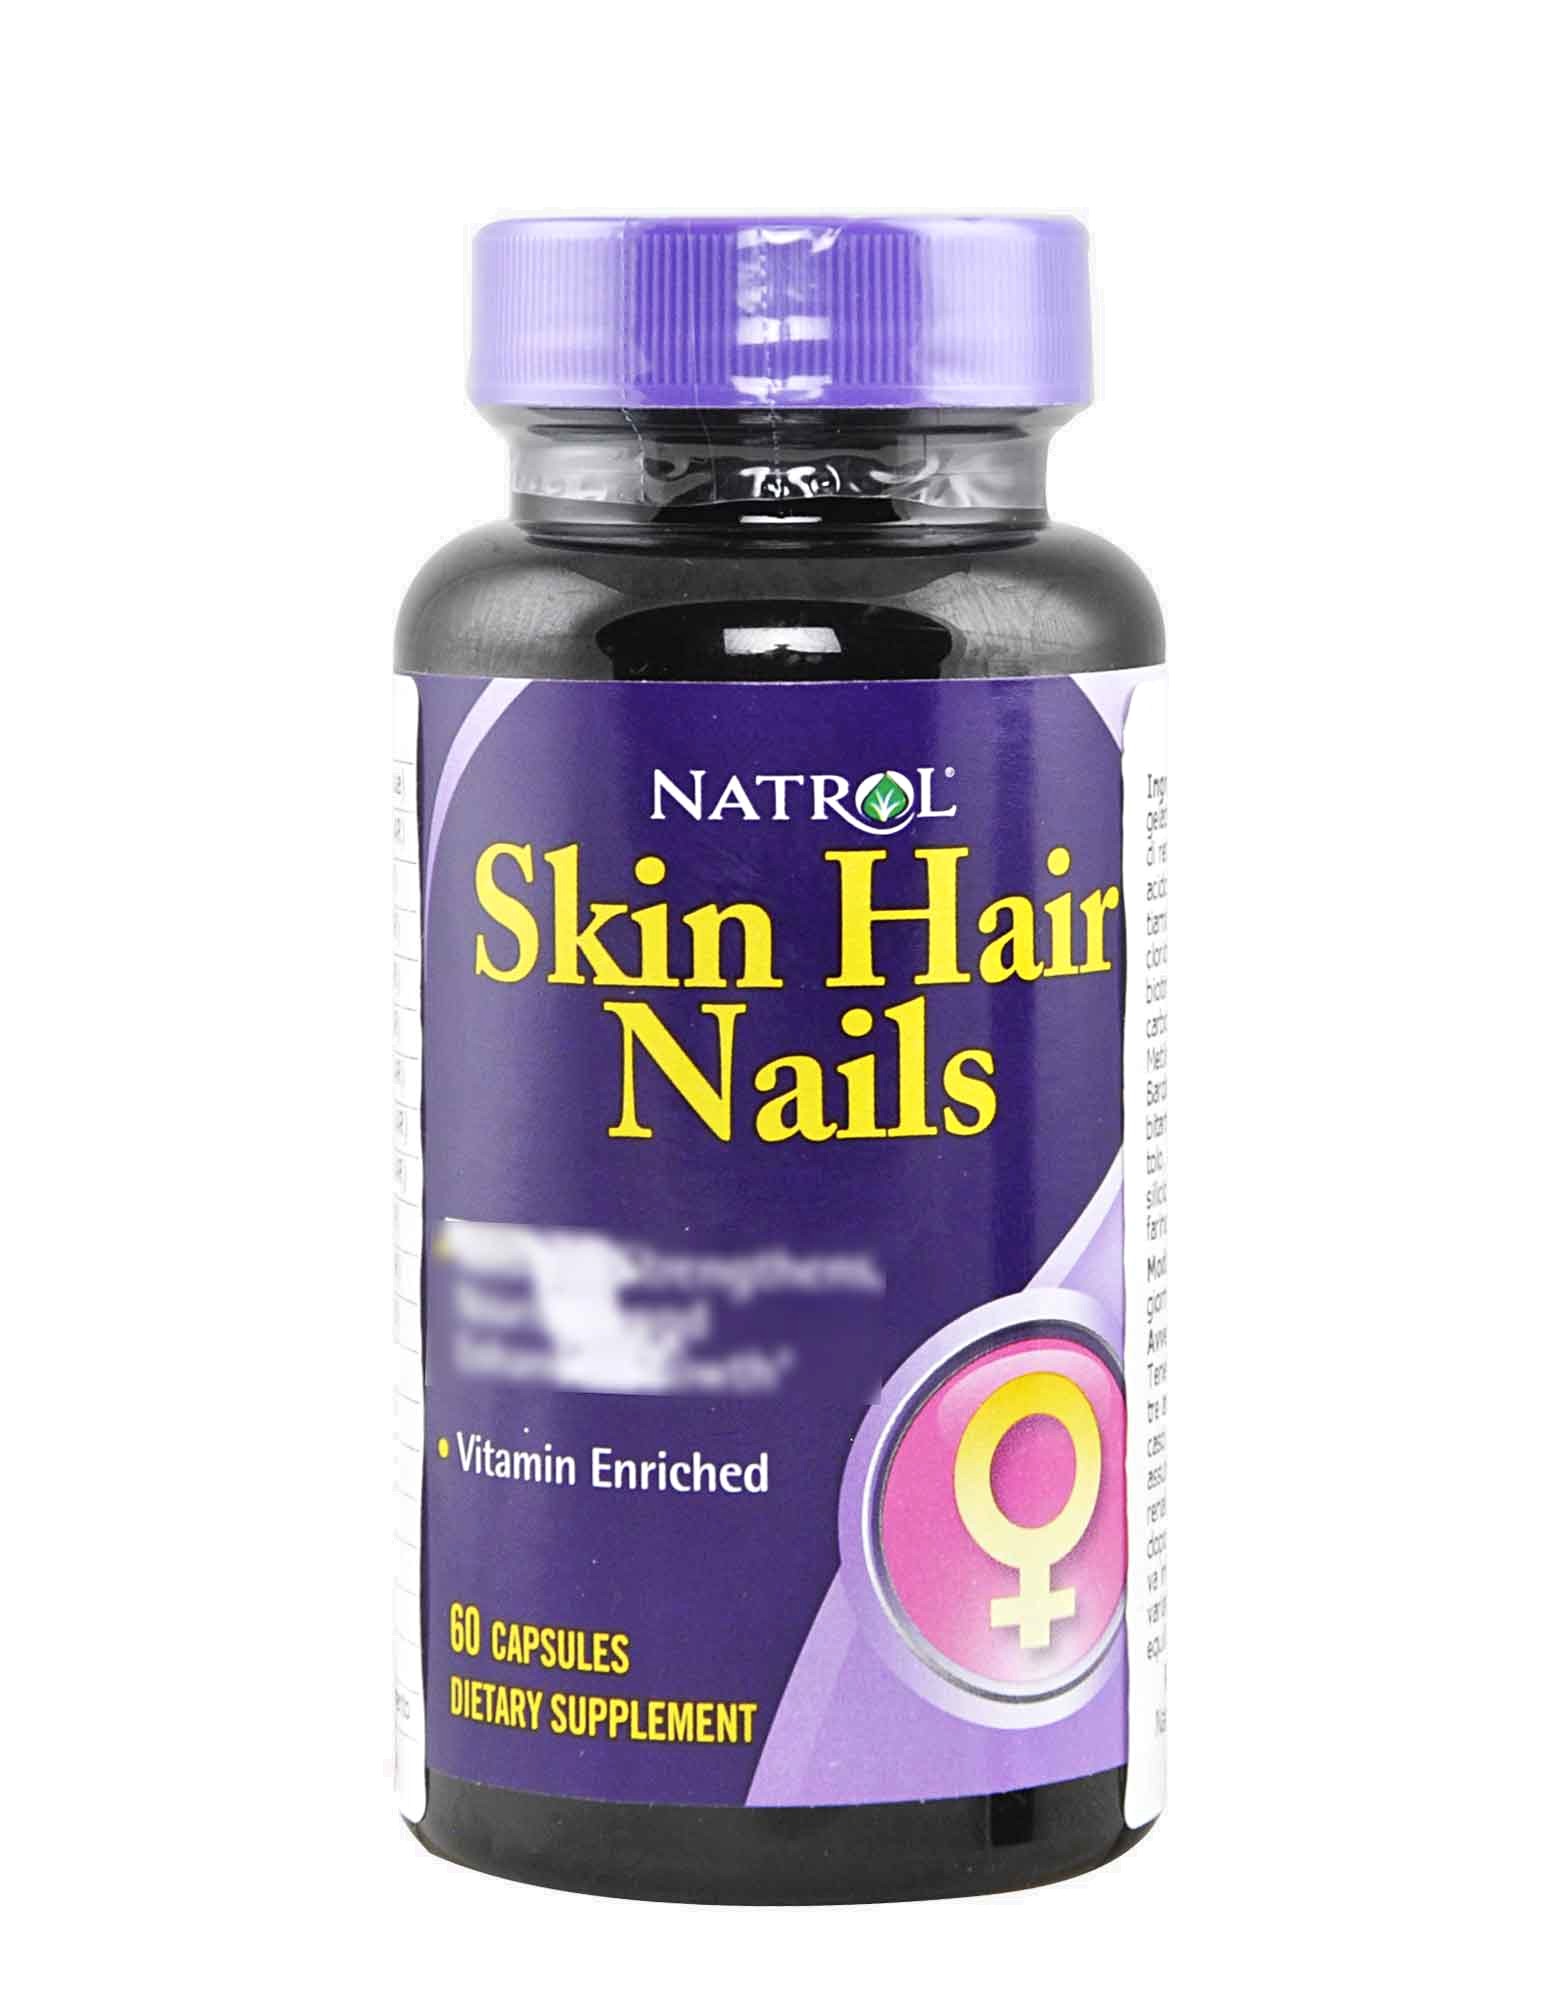 Skin Hair Nails by Natrol, 60 capsules 